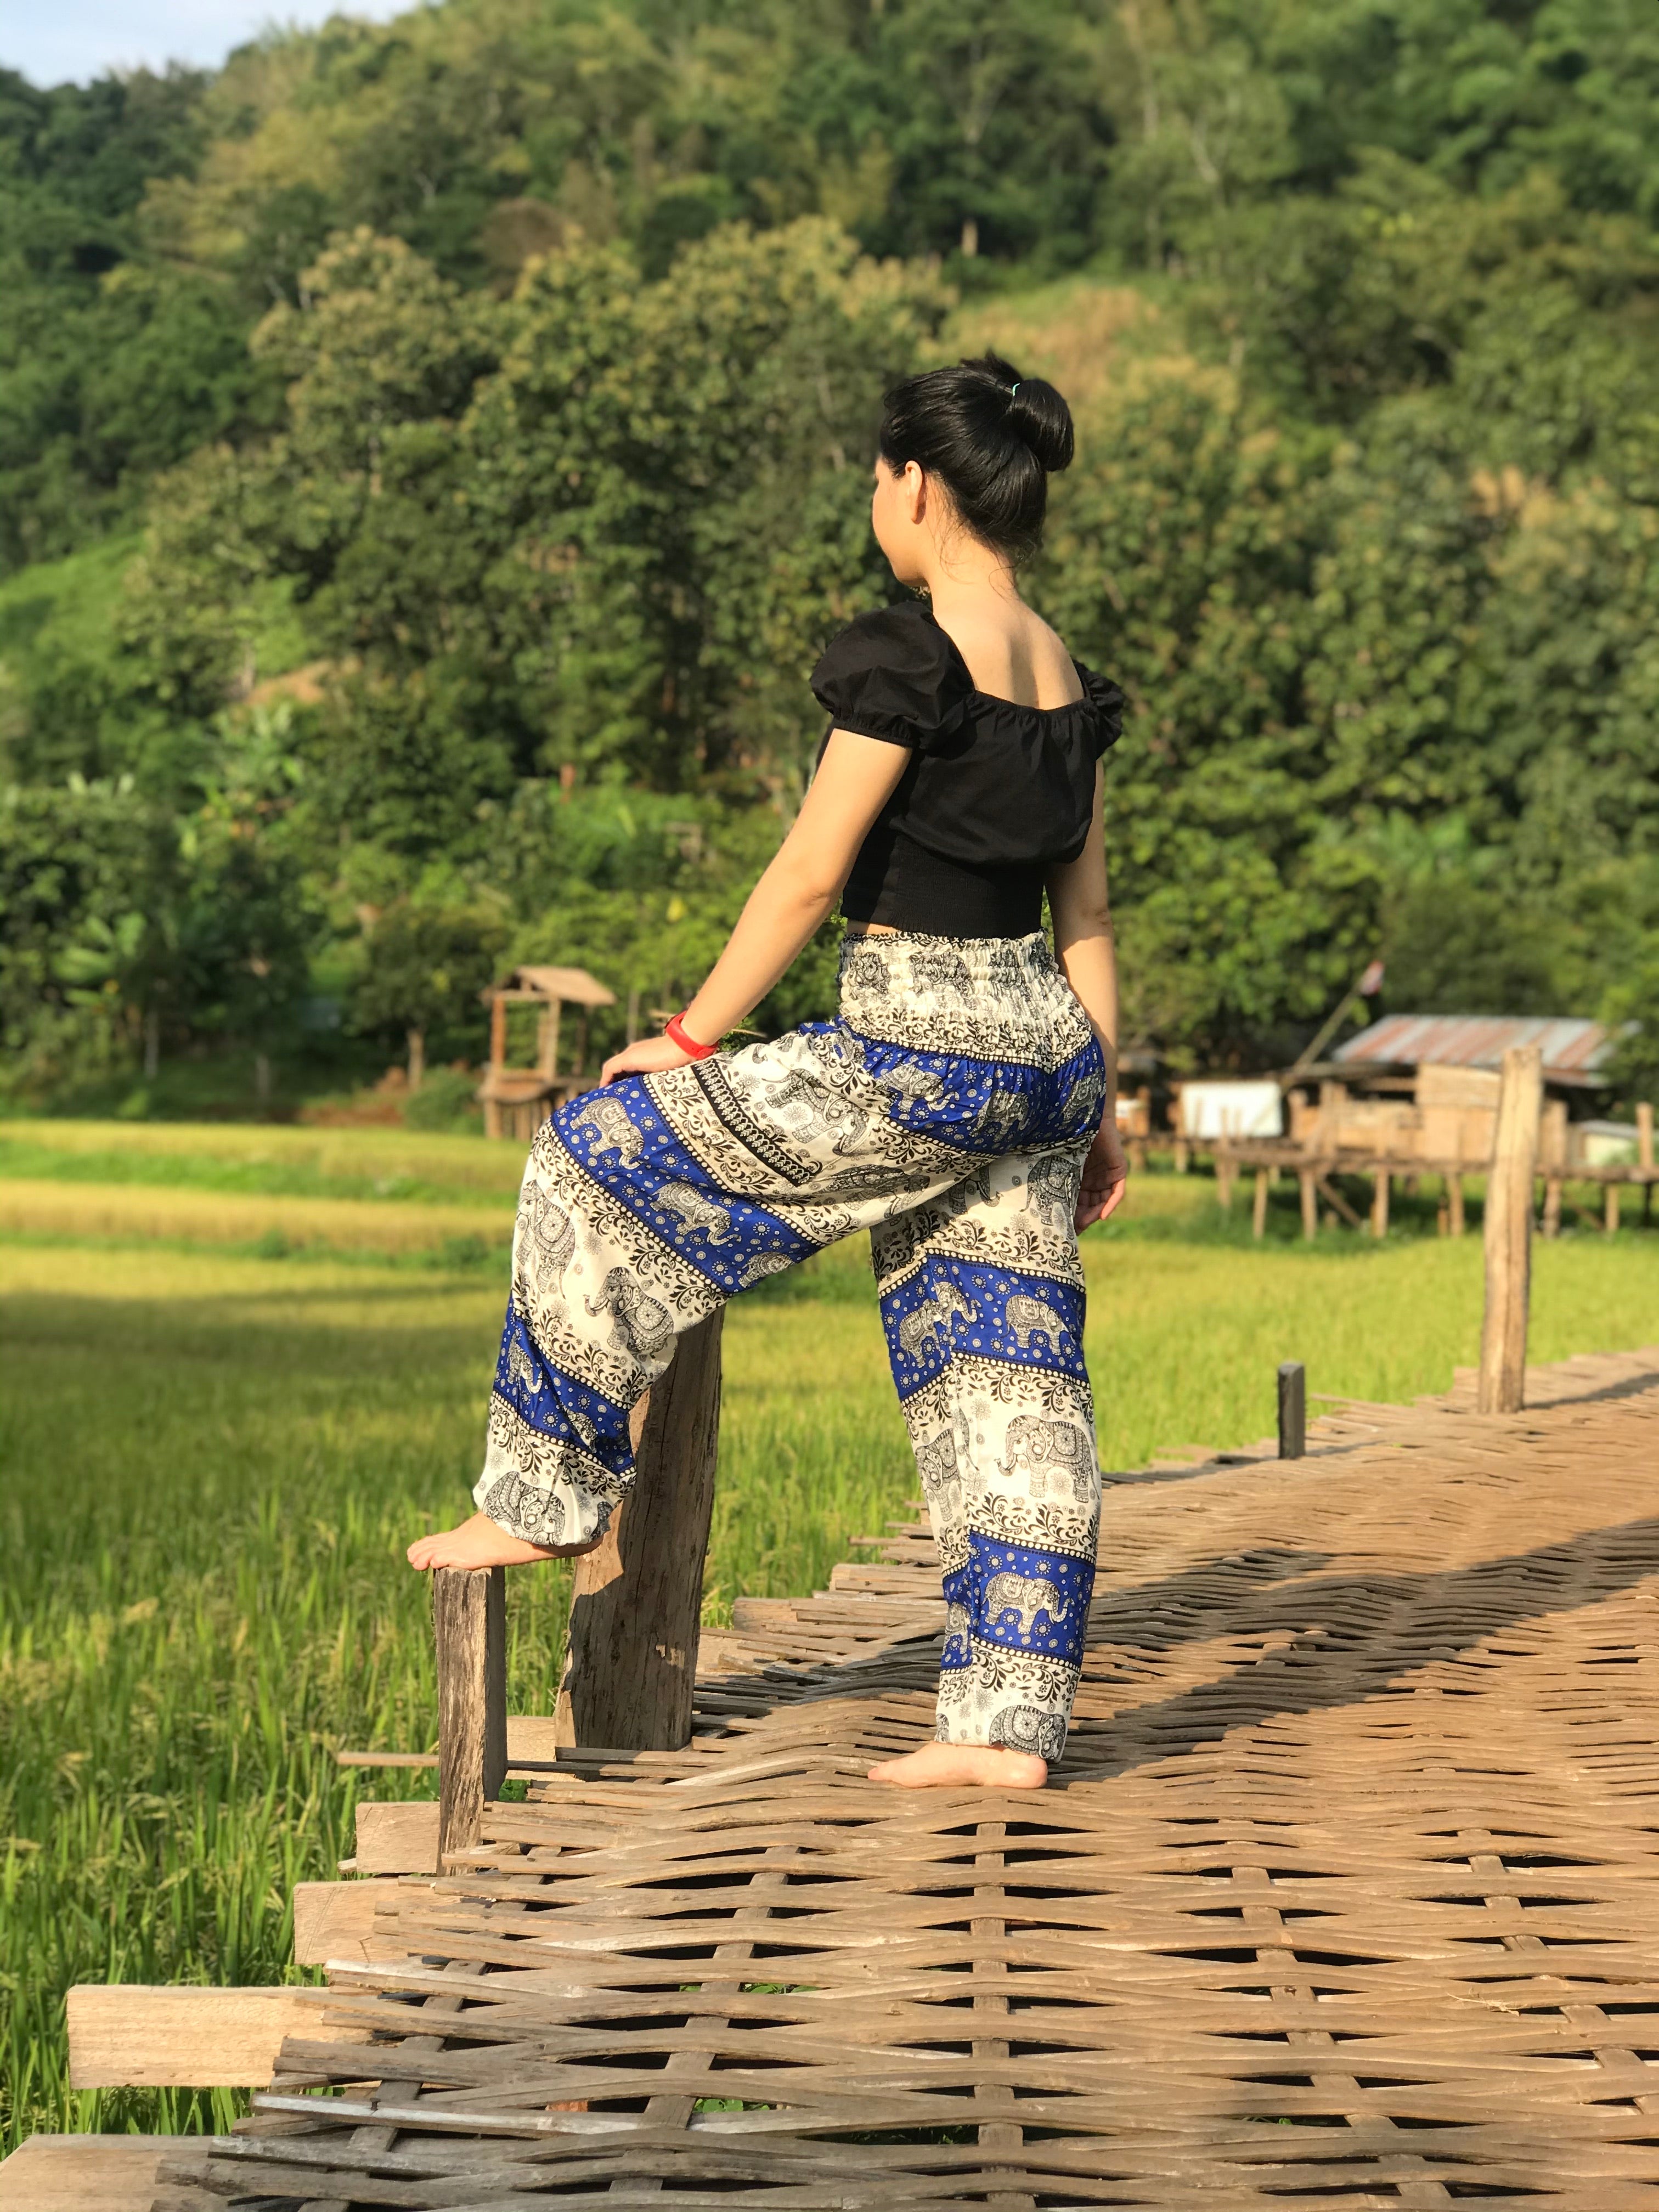 Pack of 10 Thai Elephant Pants Hippy Harem Yoga Loose Fitting FREE